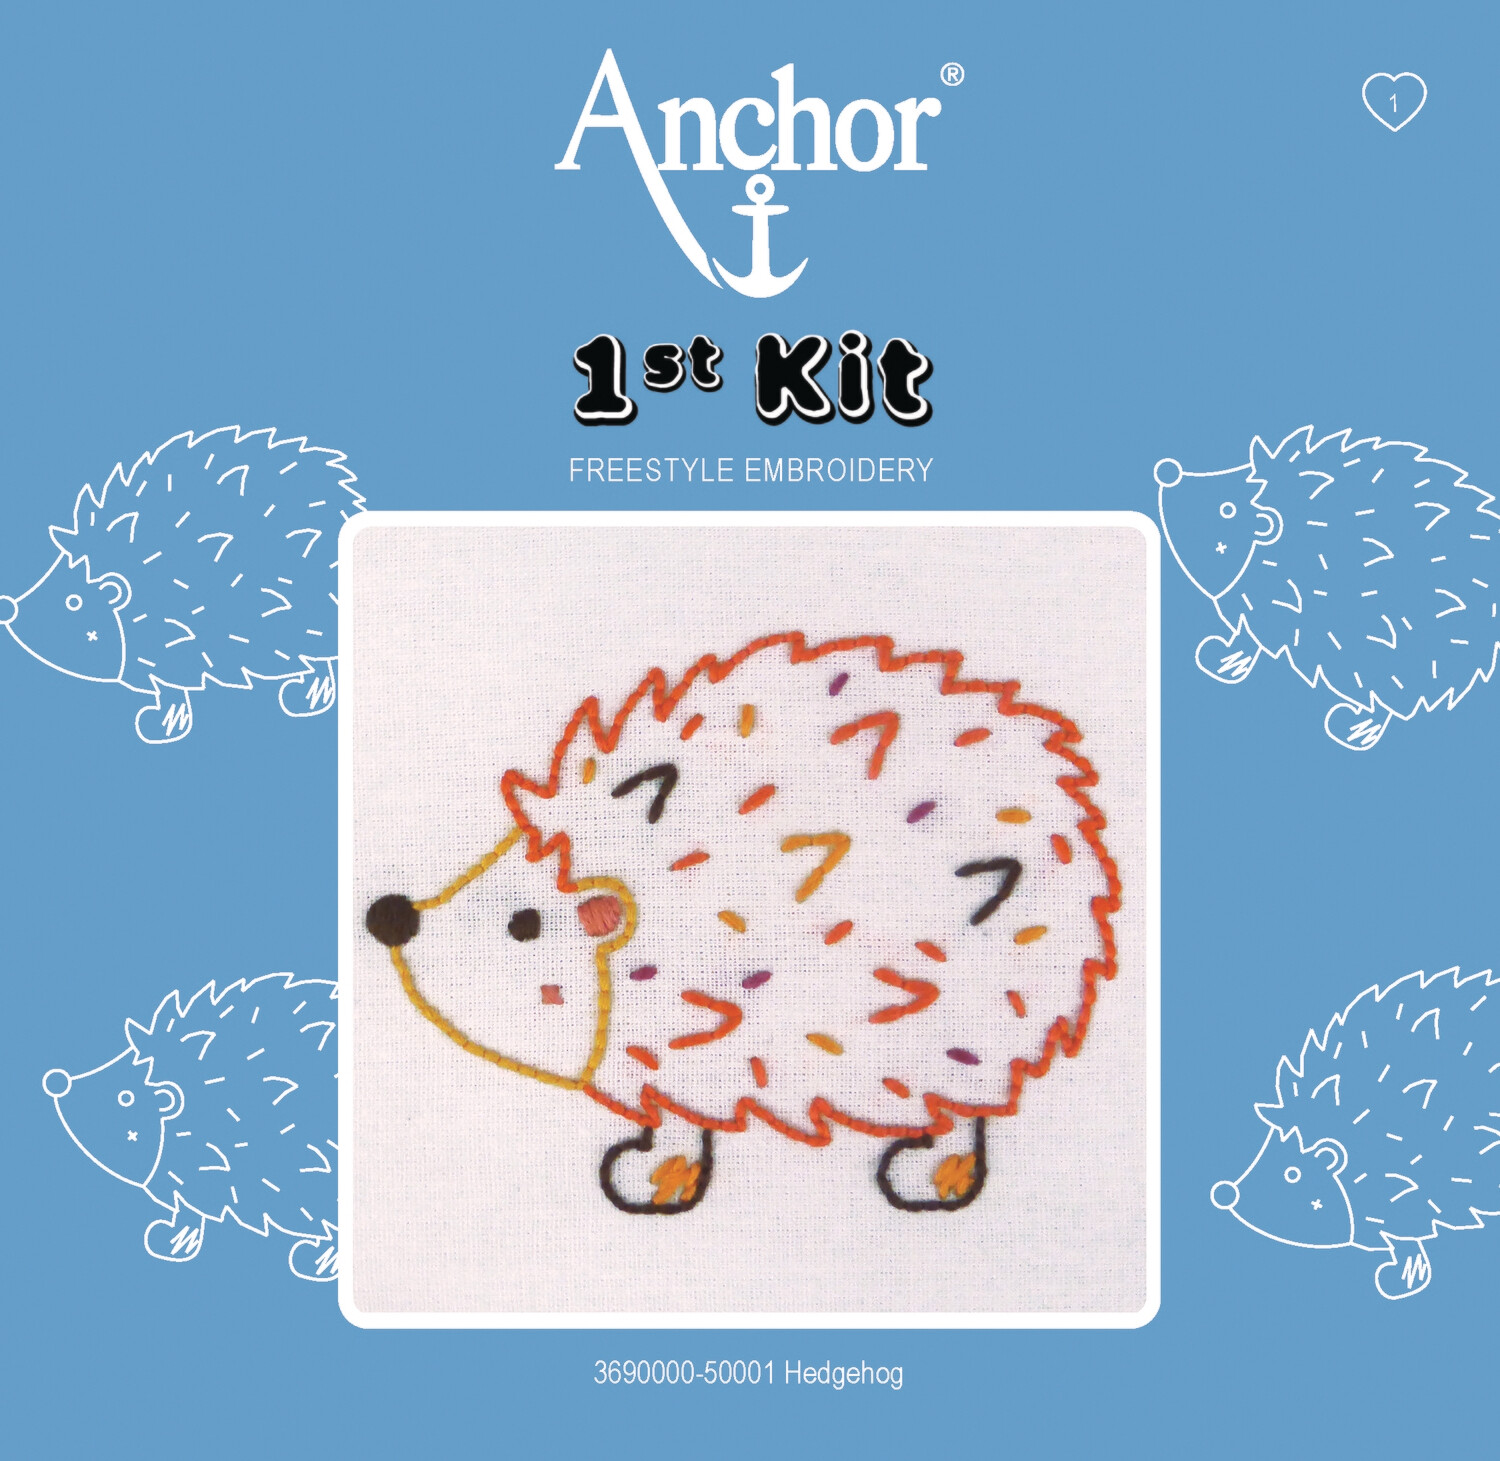 Anchor 1st Kit - Freestyle Hedgehog